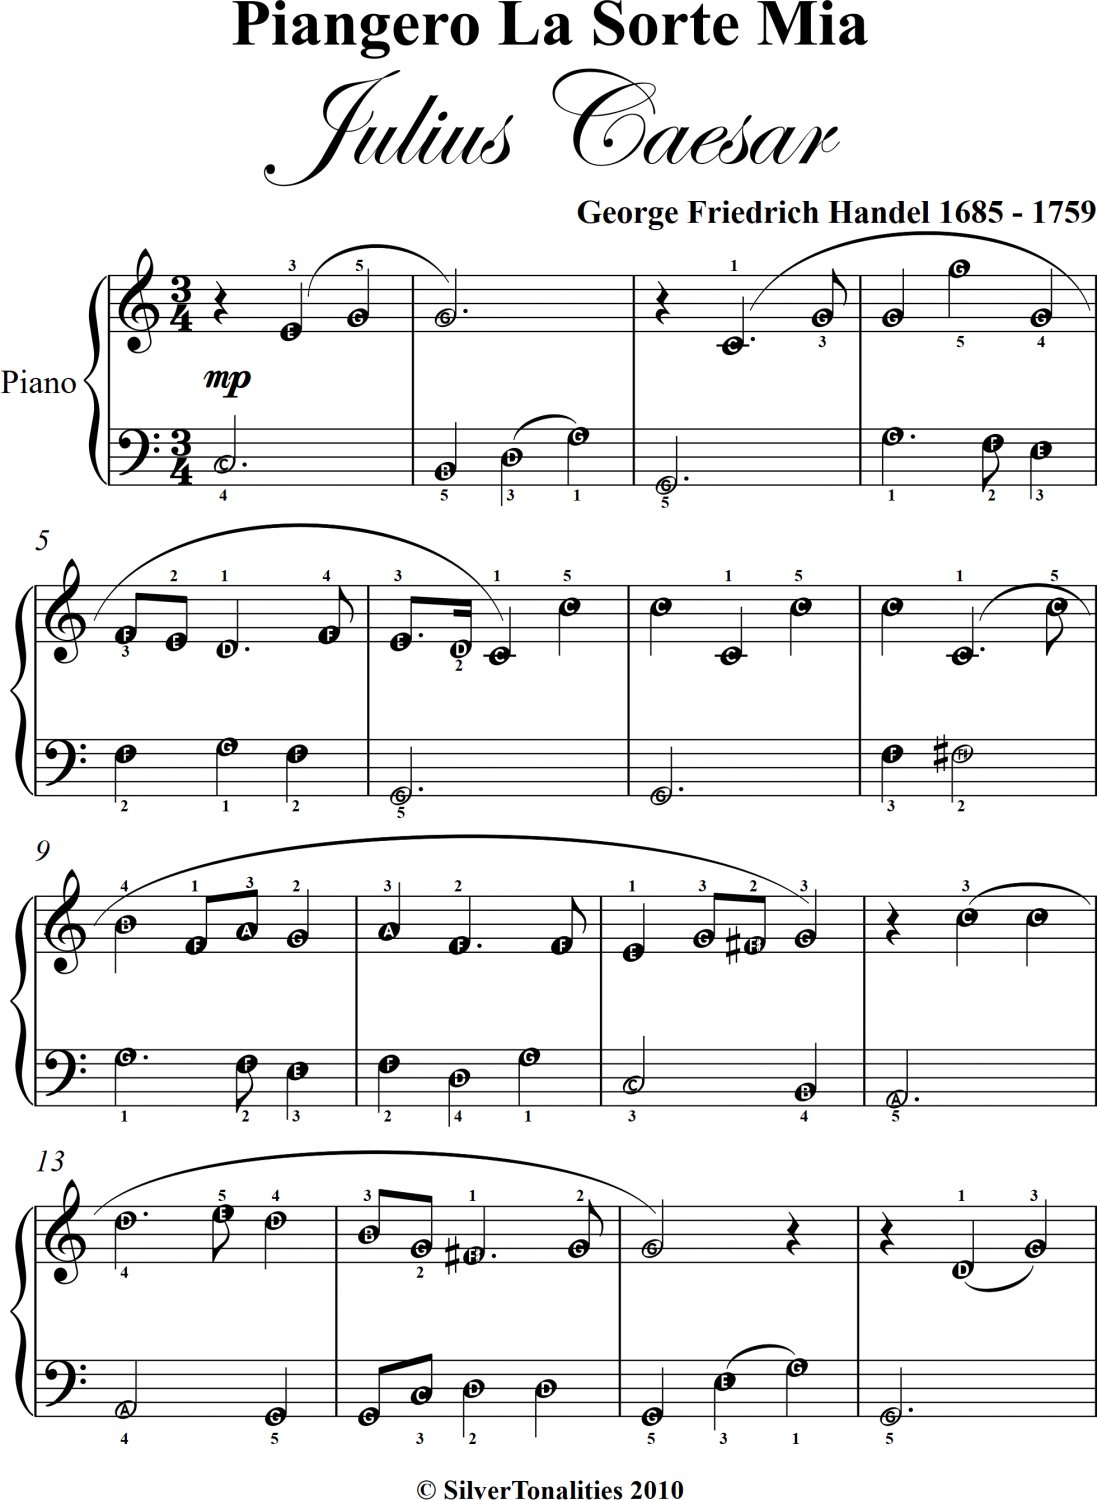 Piangero La Sorte Mia Easy Piano Sheet Music